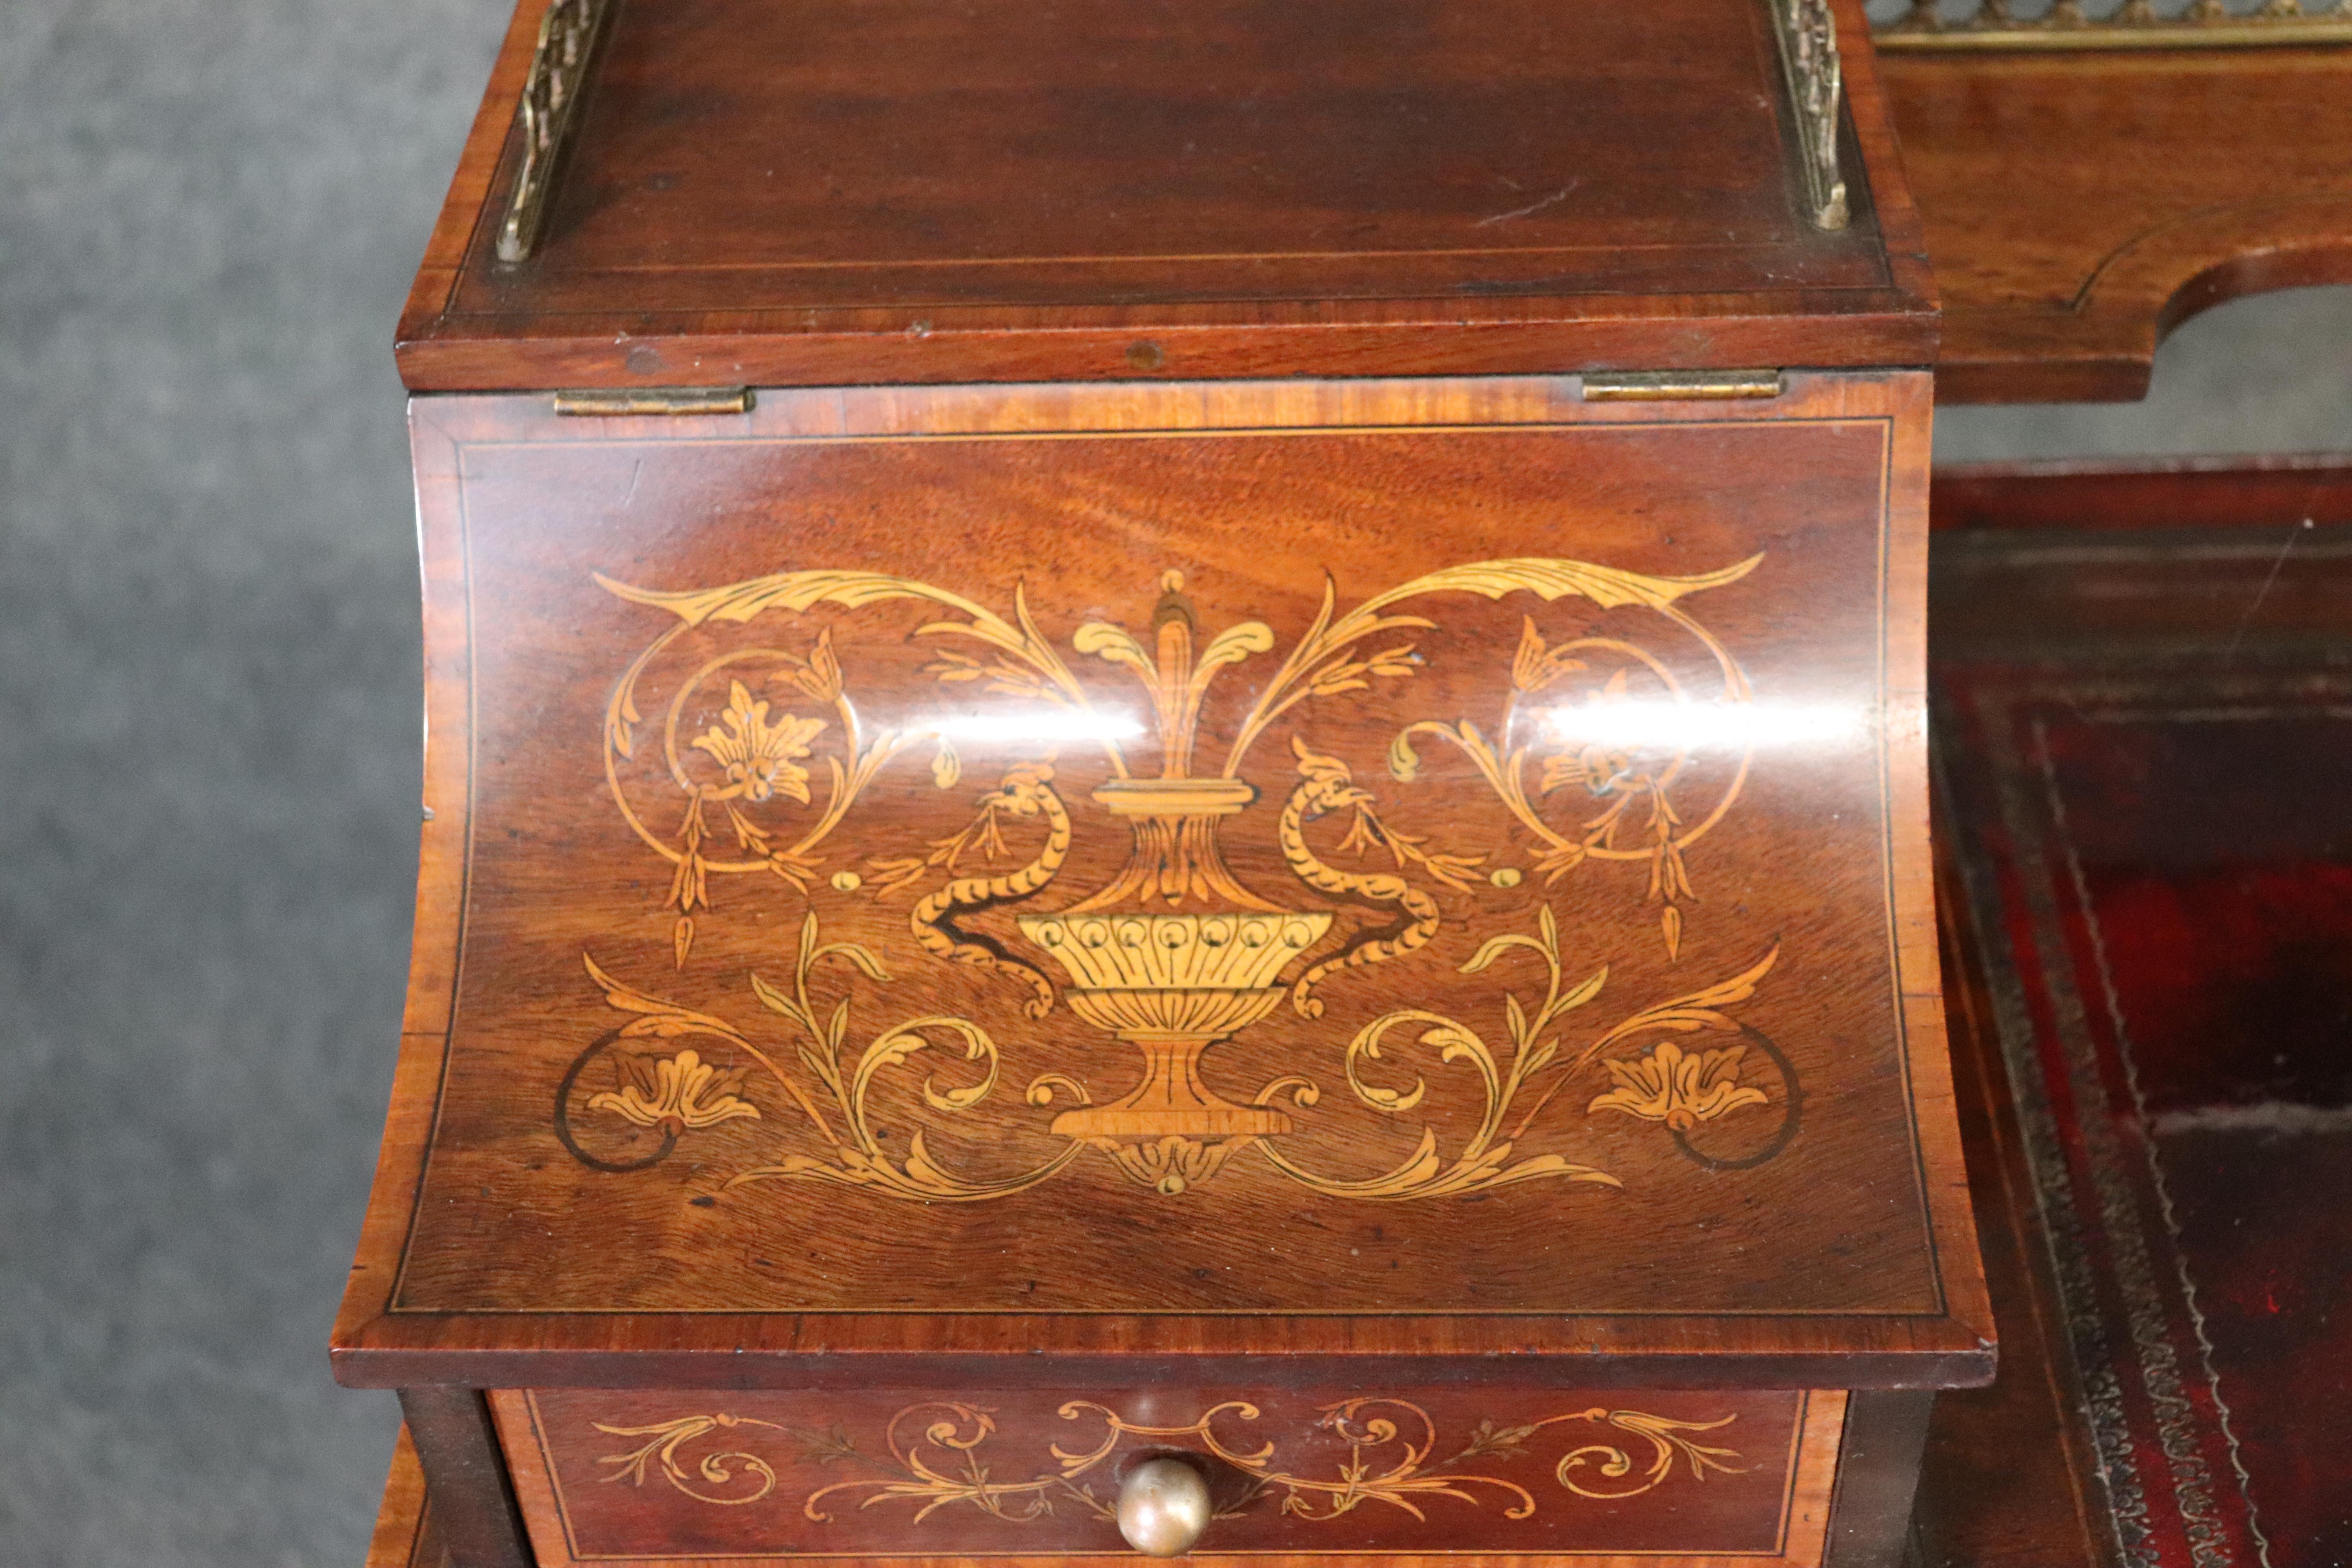 Early 20th Century English Inlaid Edwardian Burgundy Leather Writing Table Desk, circa 1920